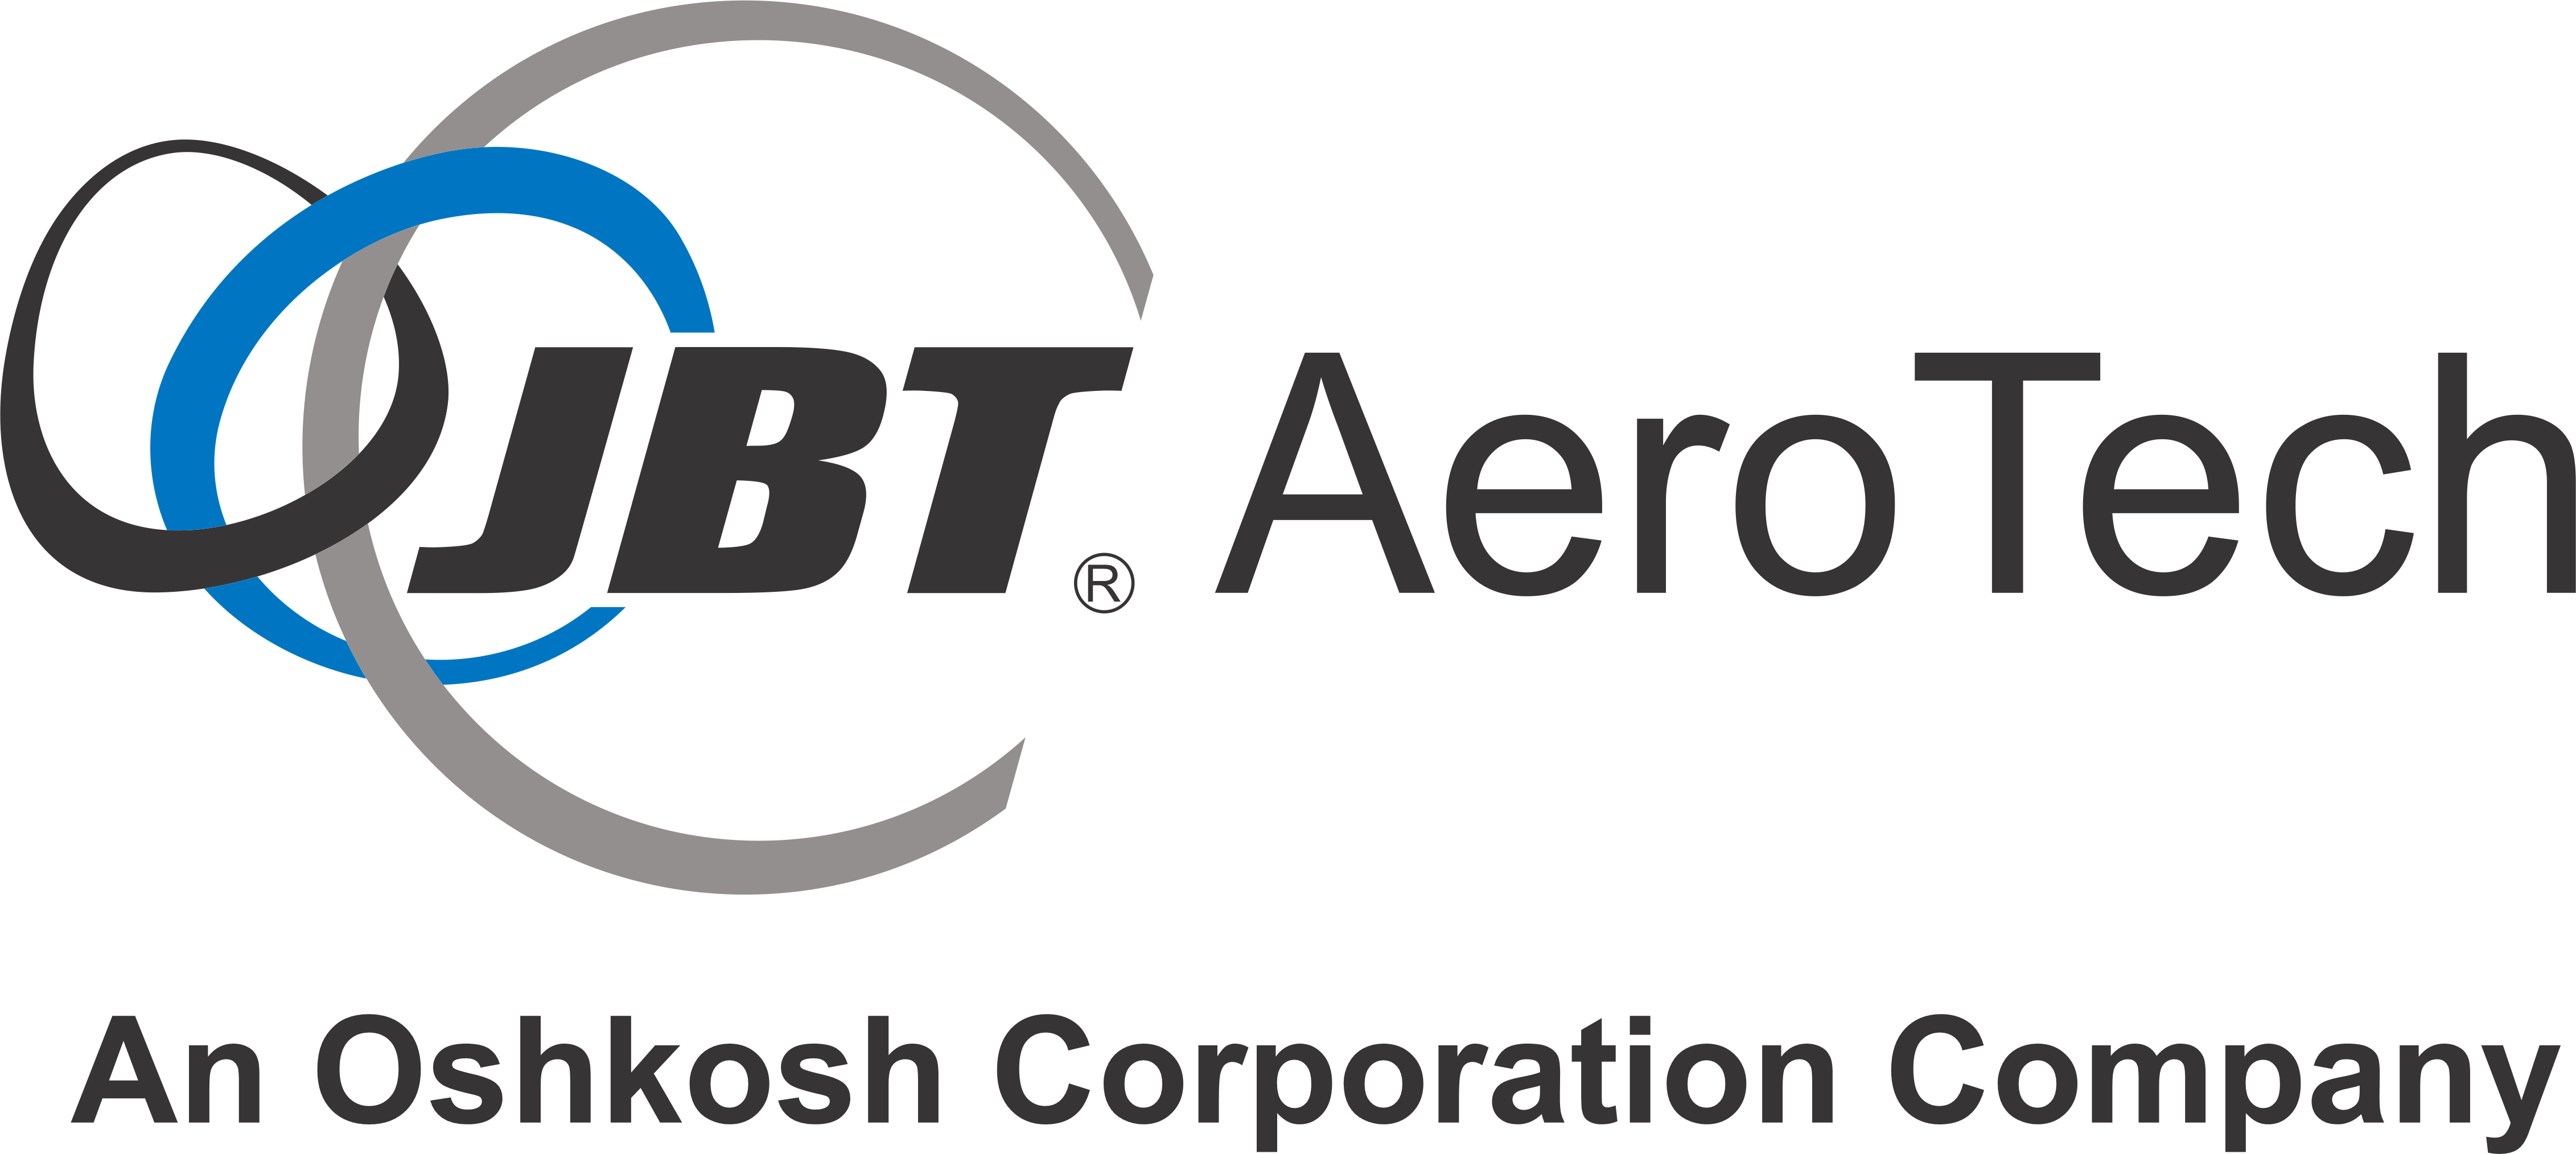 JBT AeroTech, An Oshkosh Corporation Company